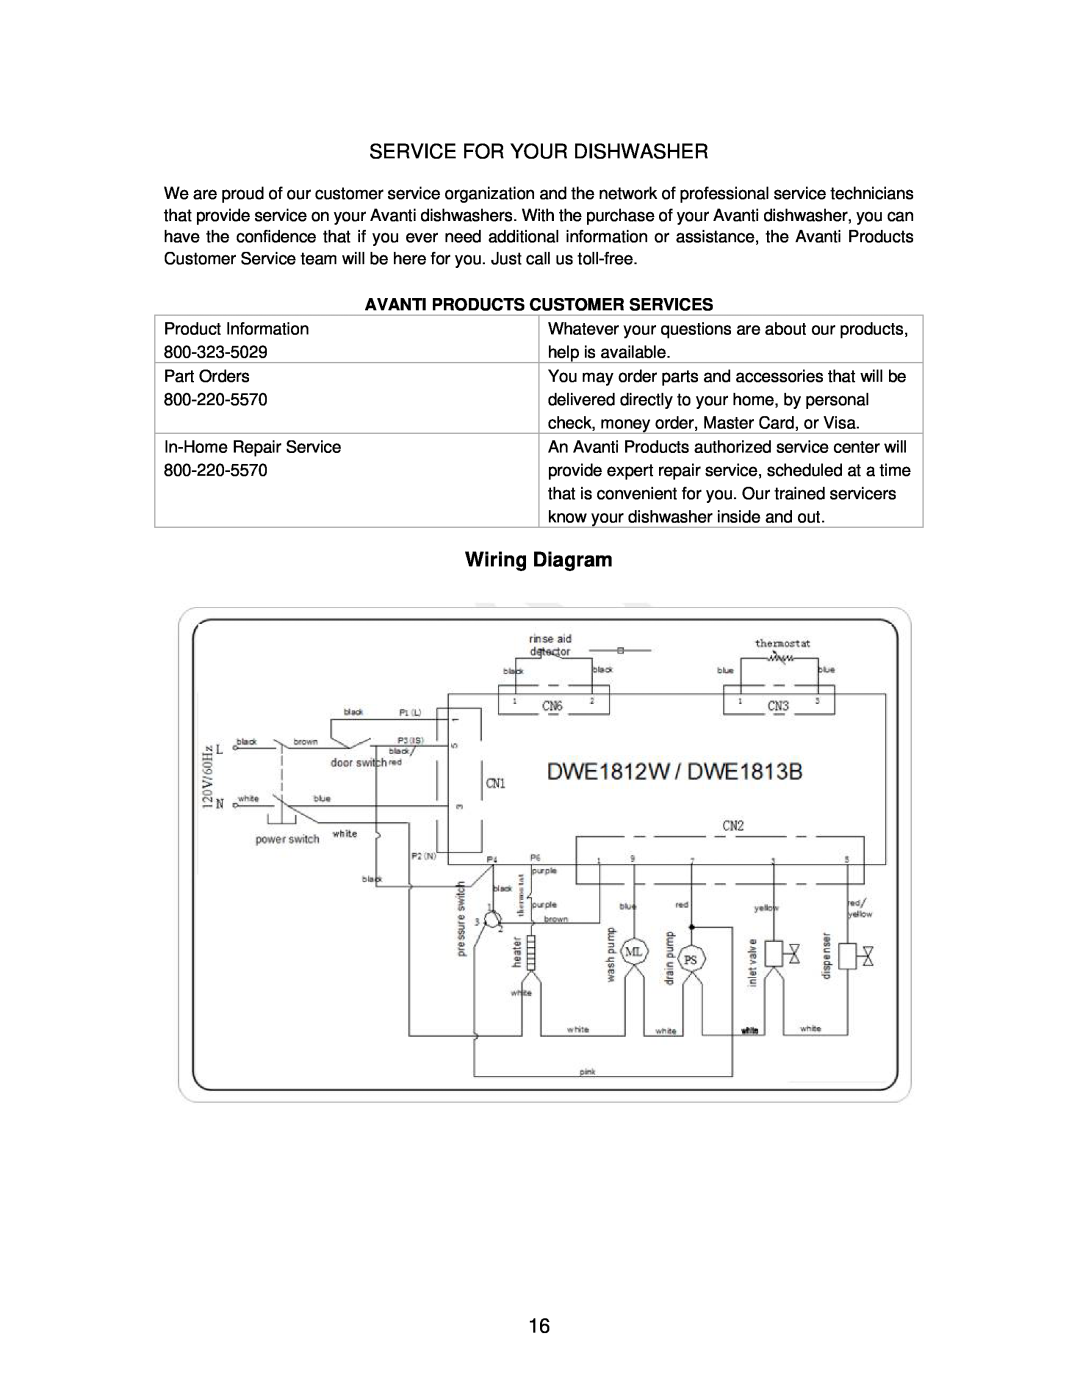 Avanti DWE1814SS instruction manual Service For Your Dishwasher, Wiring Diagram 